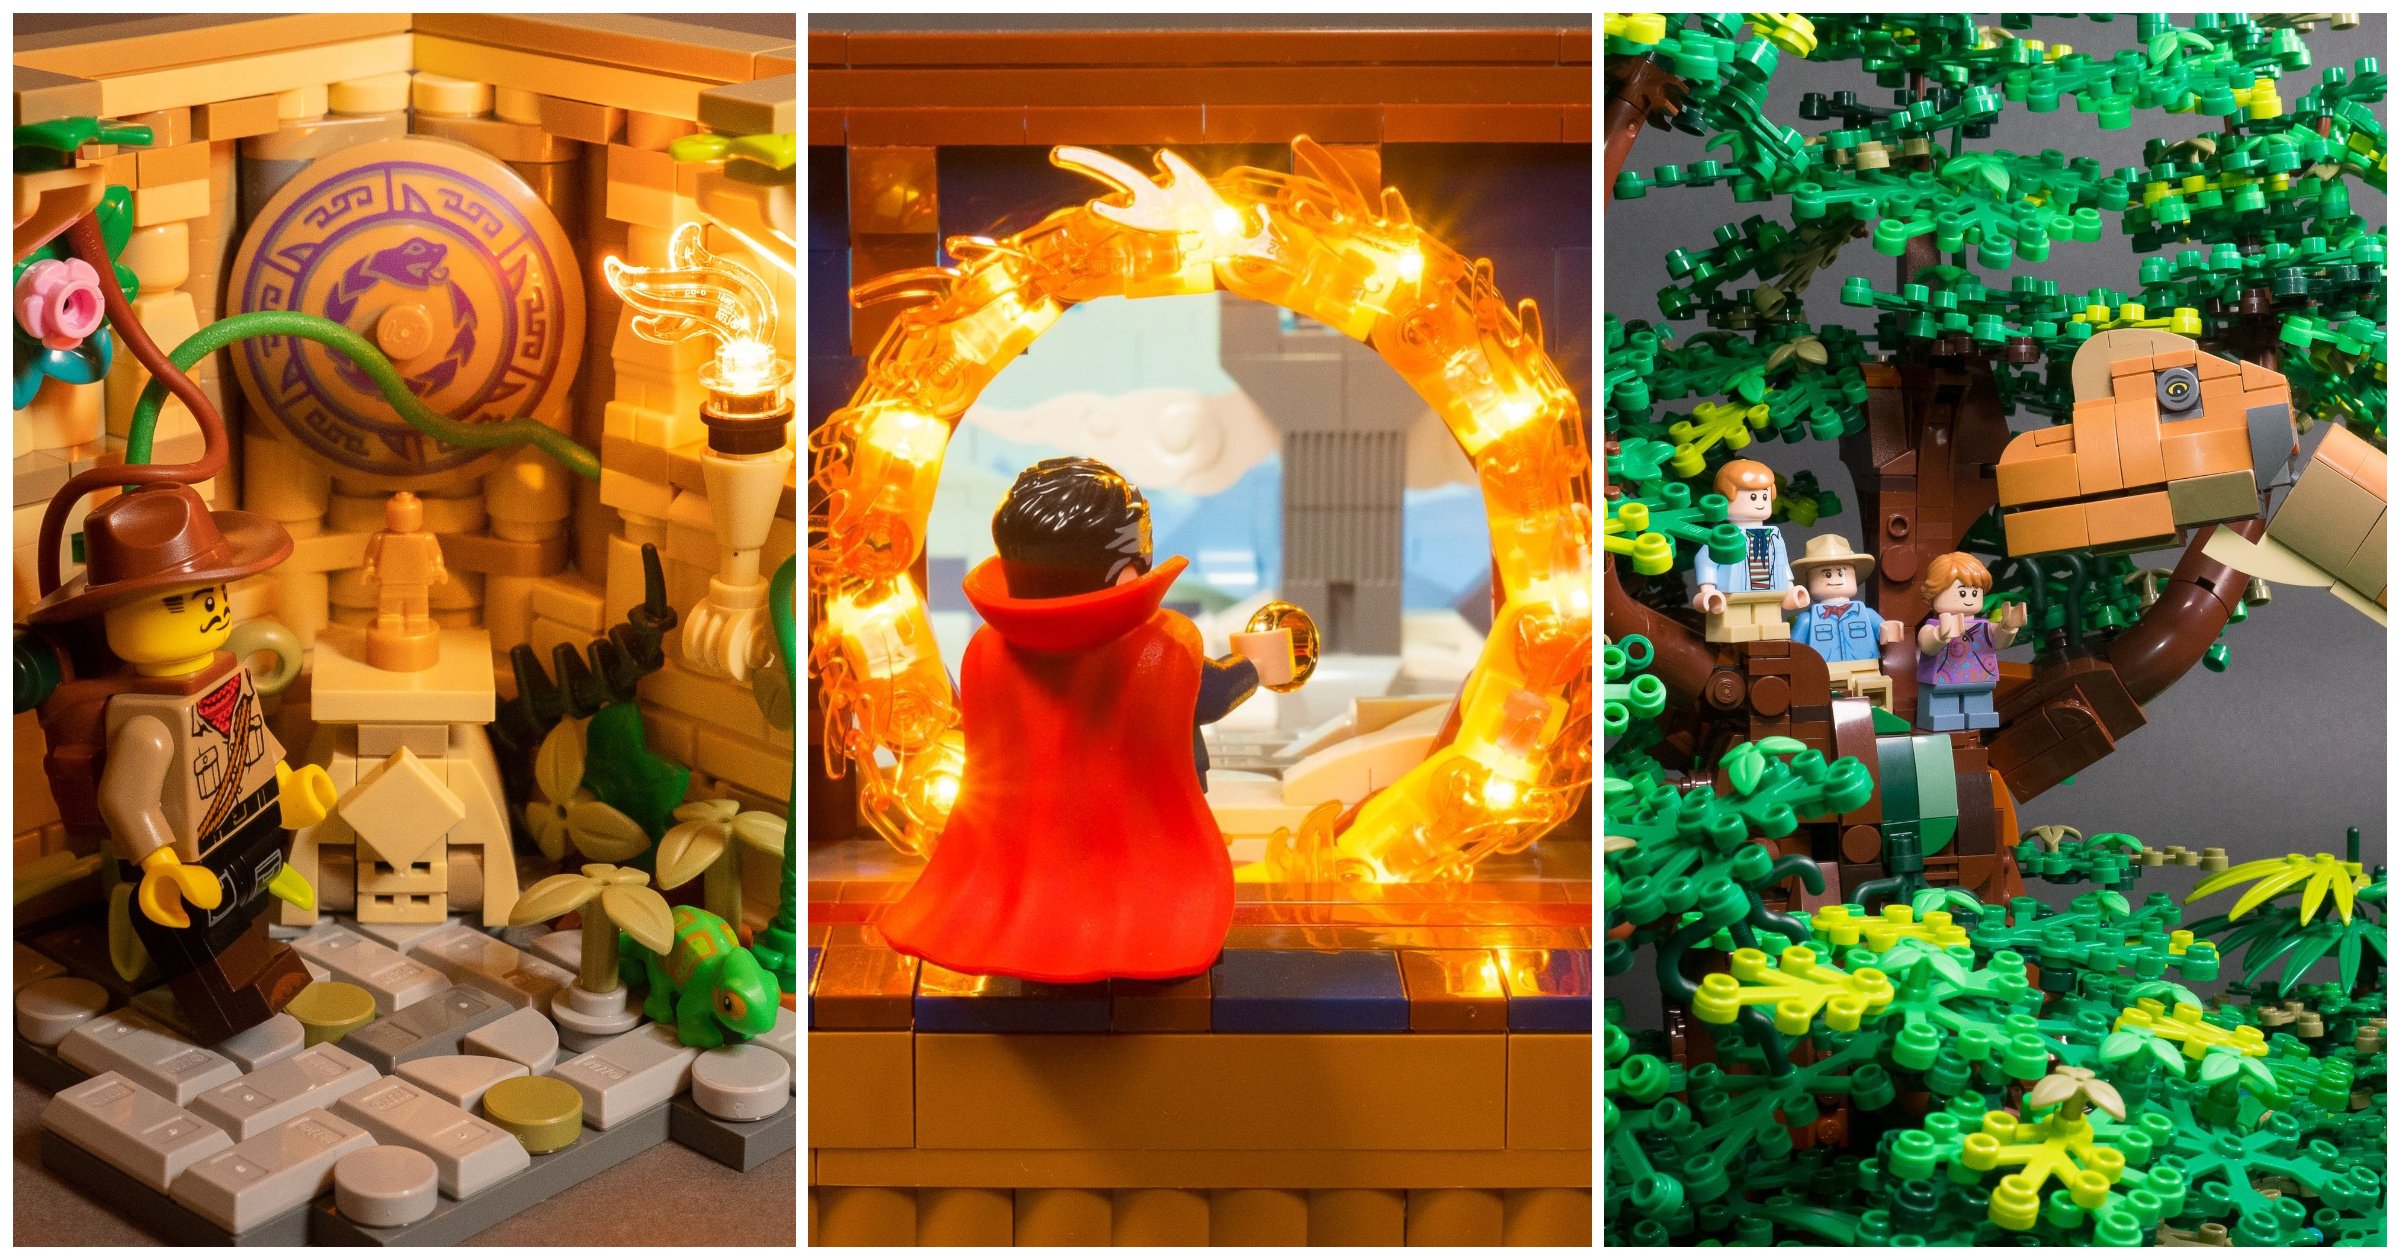 BrickNerd - All things LEGO and the LEGO fan community